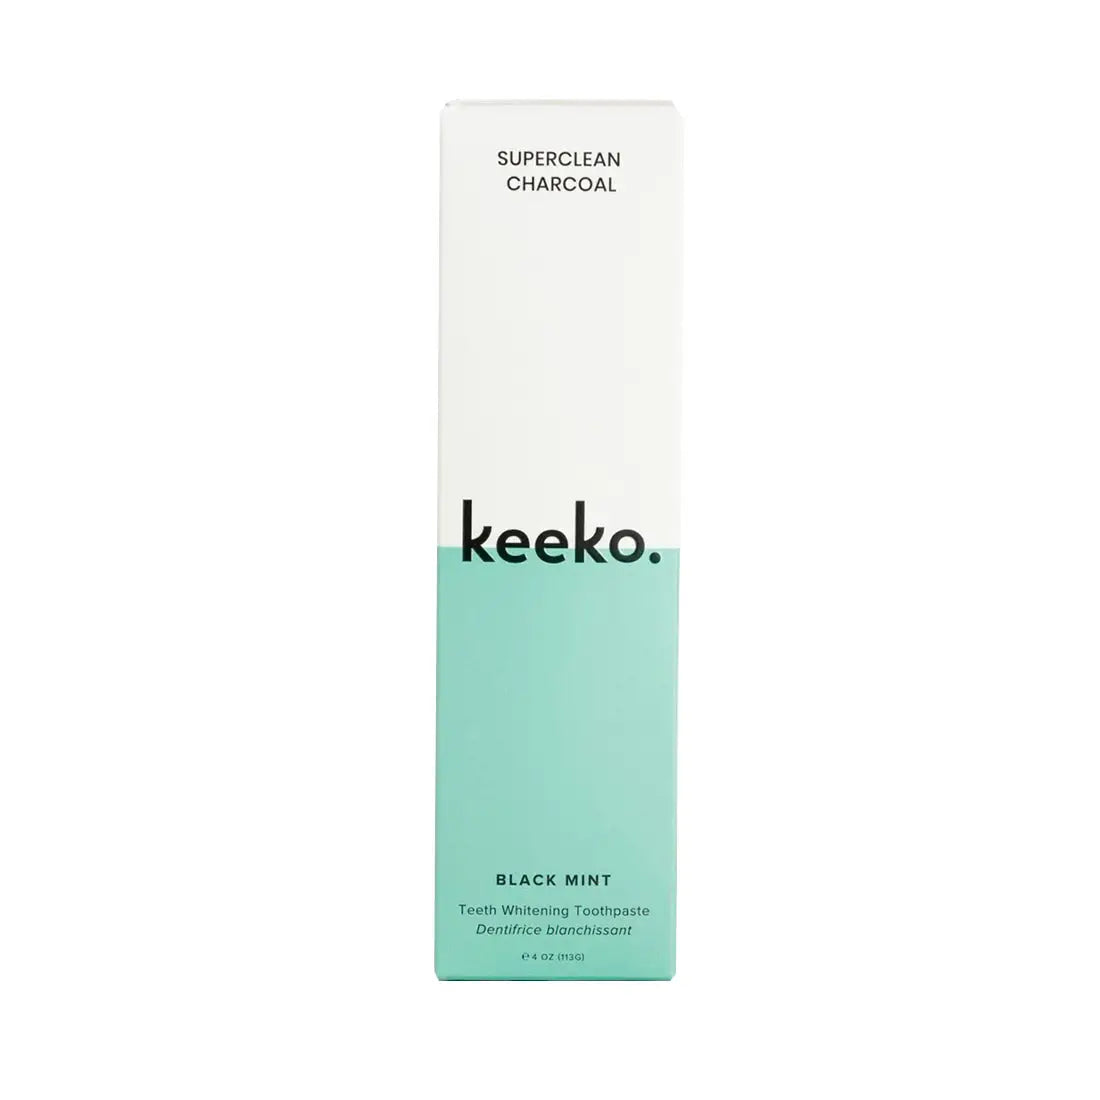 Keeko Oil Superclean Charcoal Toothpaste